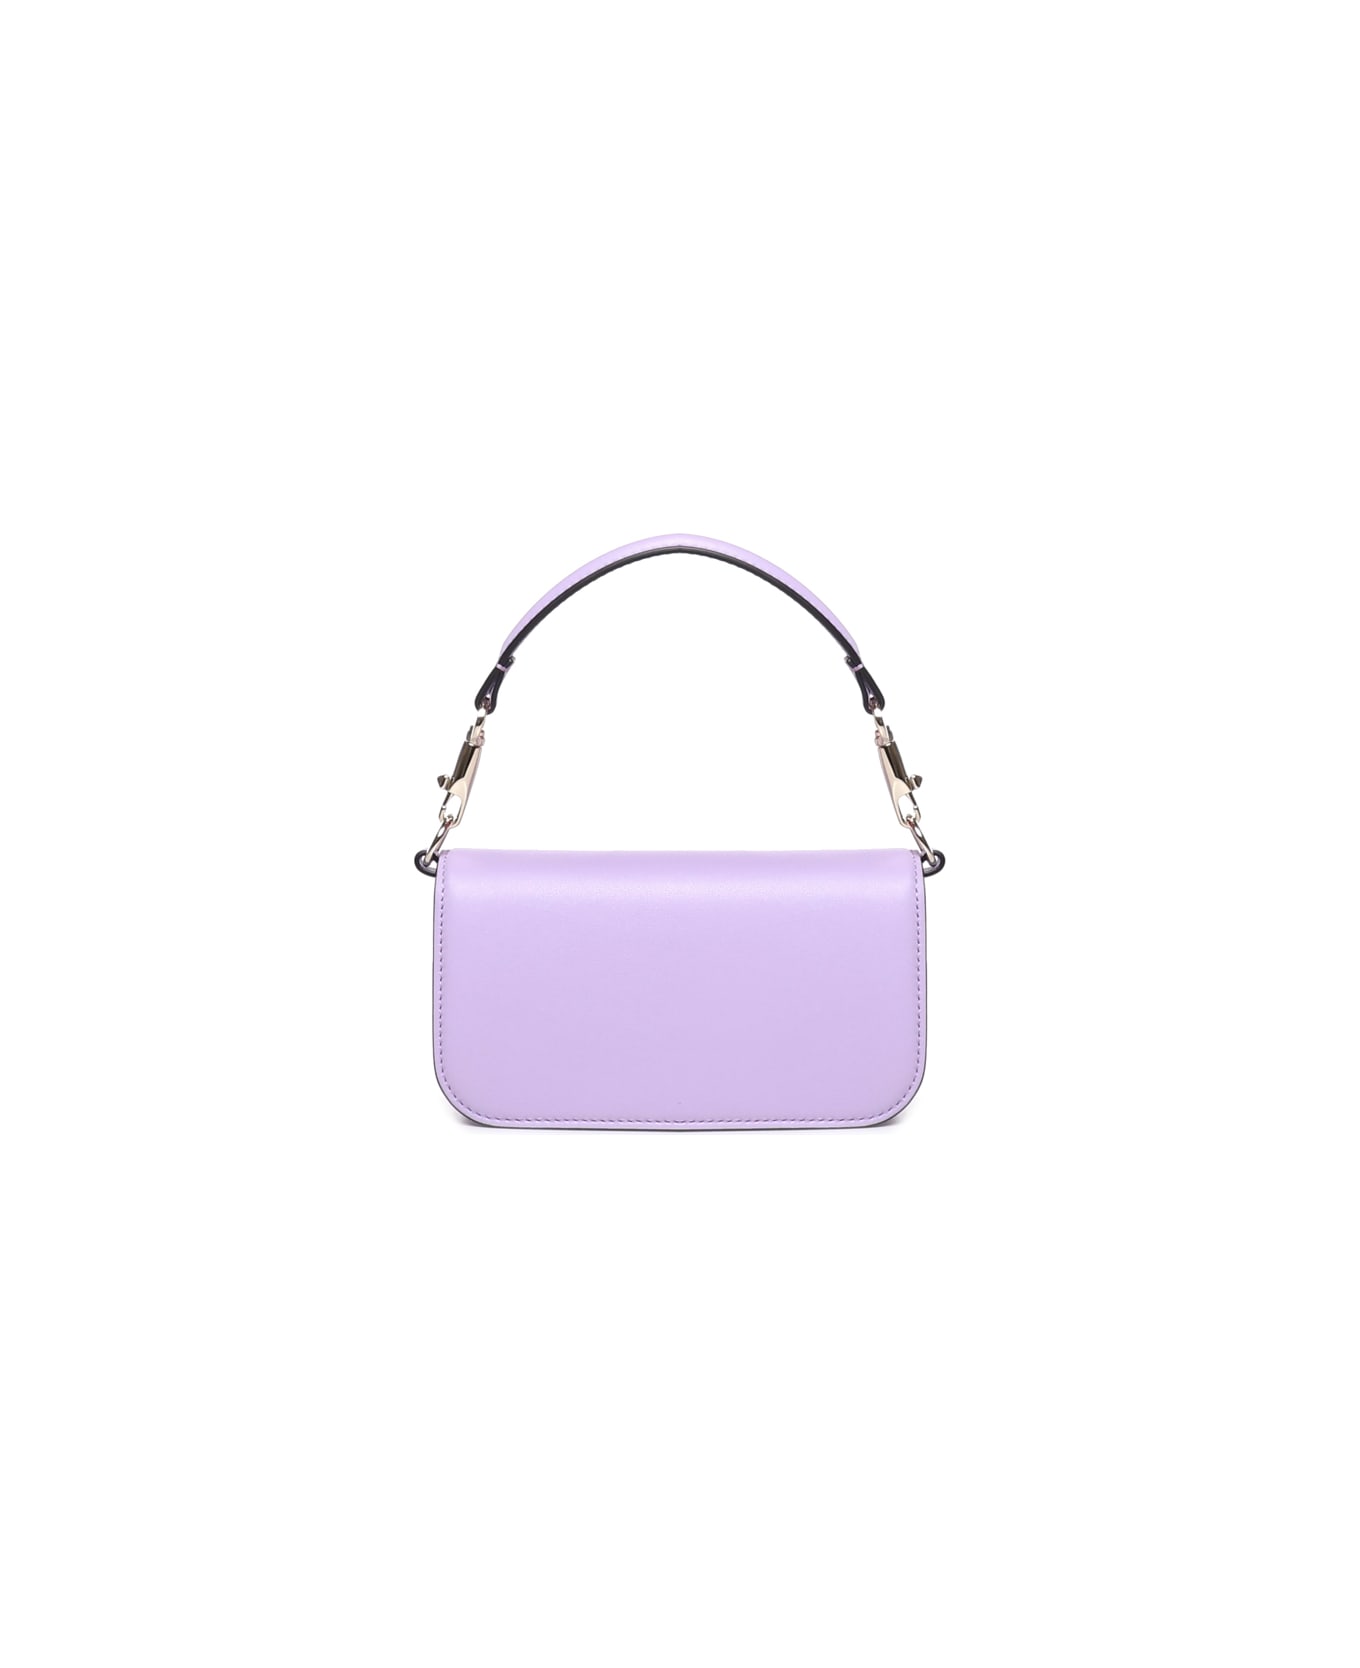 Valentino Garavani Locò Bag In Calfskin - Aster lilac/violet